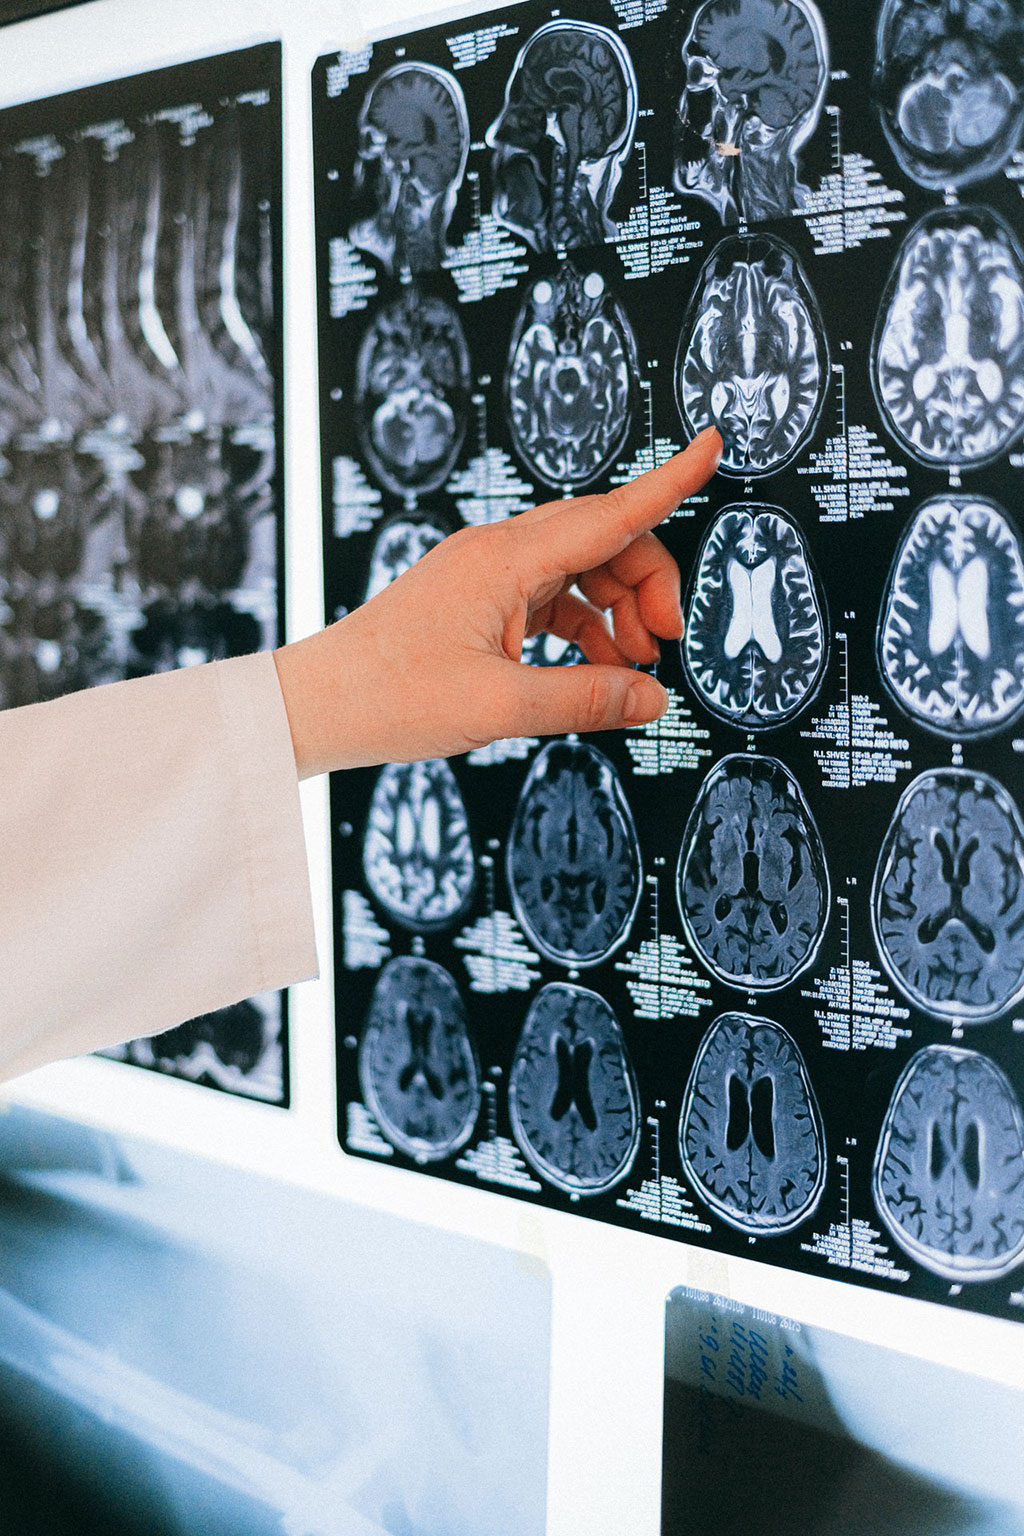 Image: Algorithm detects Alzheimer’s disease from MRI images (Photo courtesy of KTU)